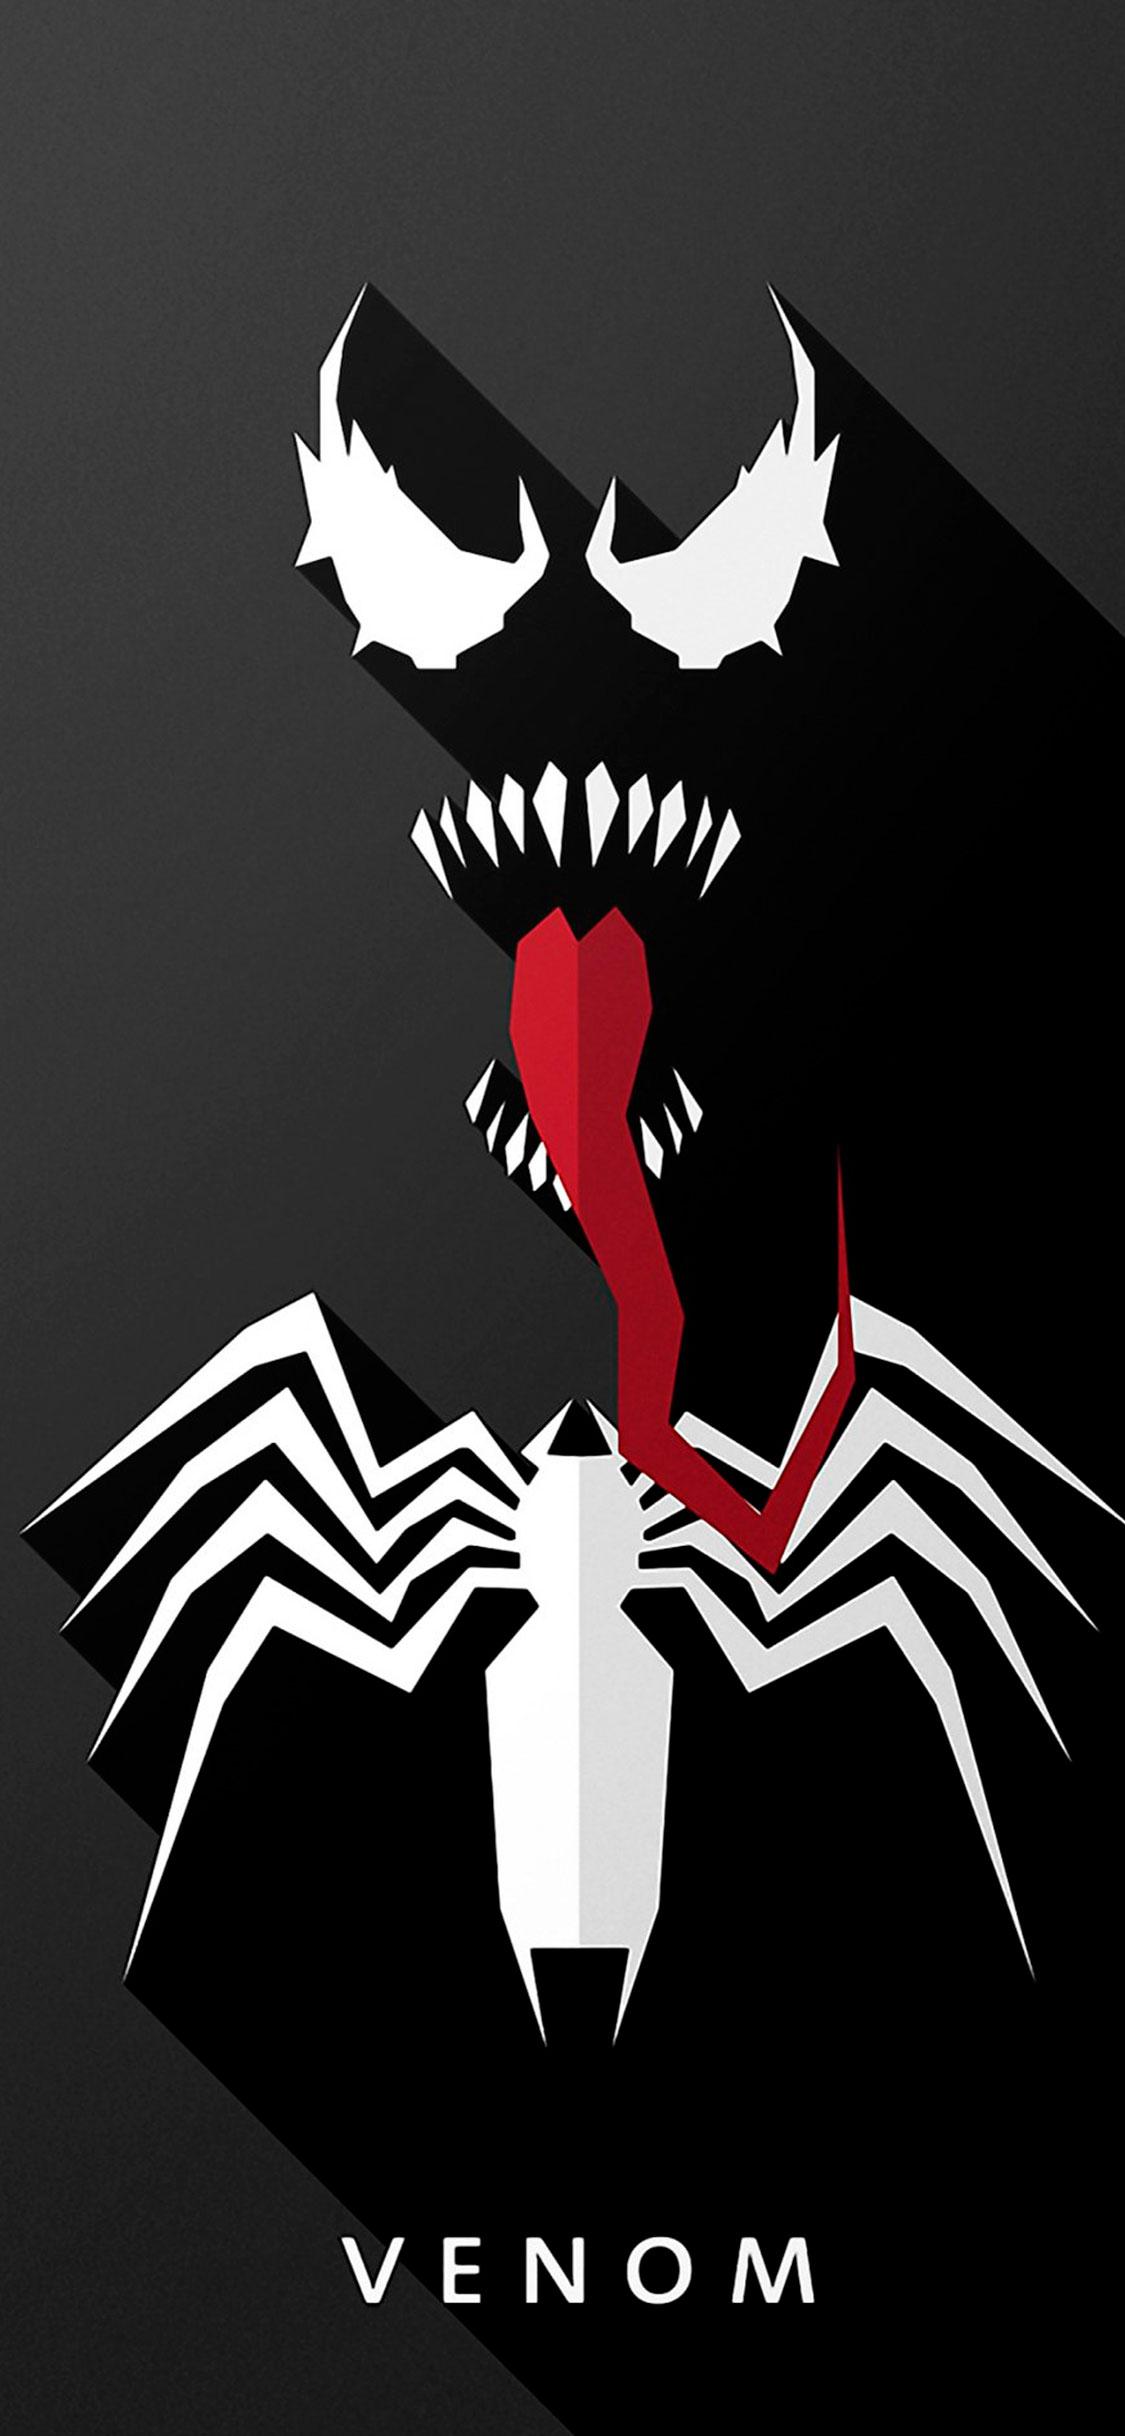 Venom Wallpaper for iPhone X, 6